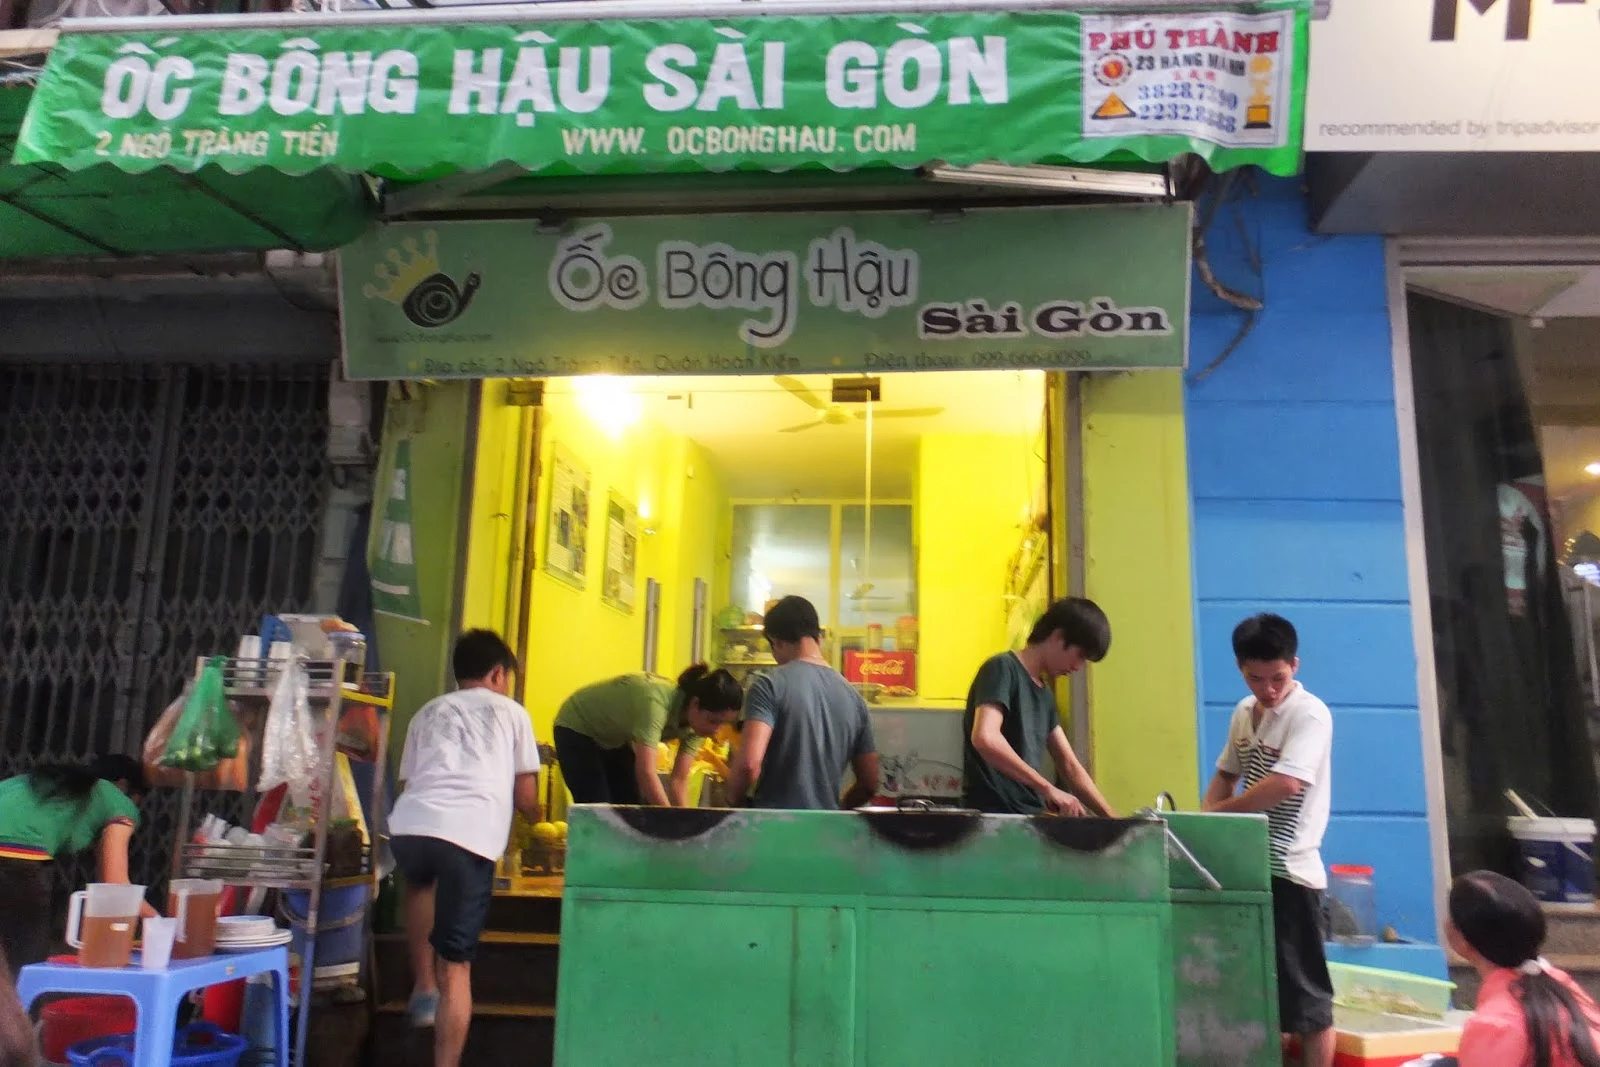 oc-bong-hau-sai-gon 貝料理店